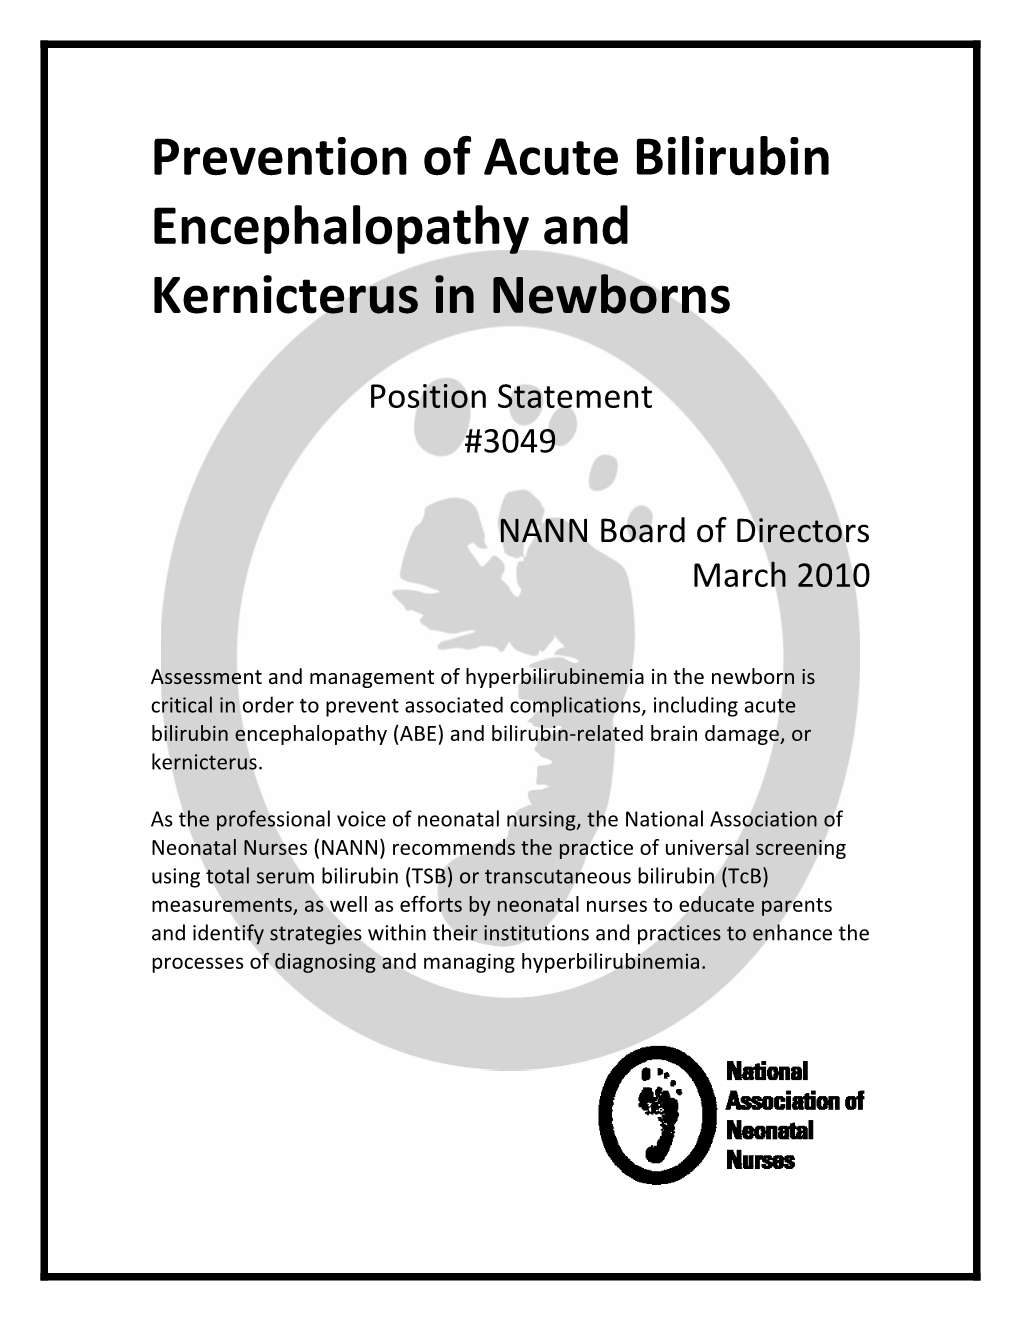 Prevention of Acute Bilirubin Encephalopathy and Kernicterus in Newborns